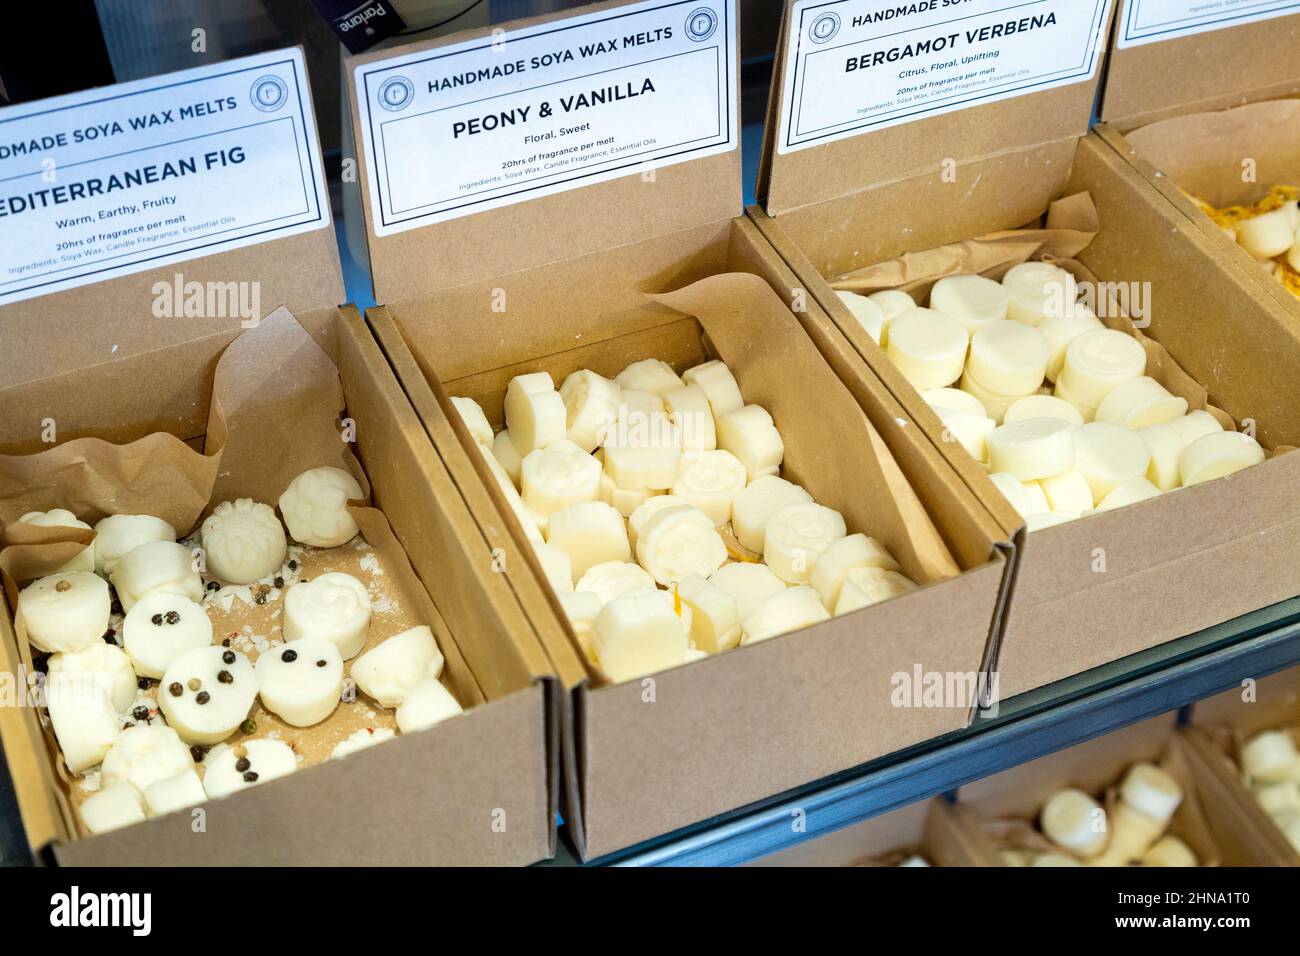 Selection of soya wax melts (Etcetera, Hitchin, UK) Stock Photo